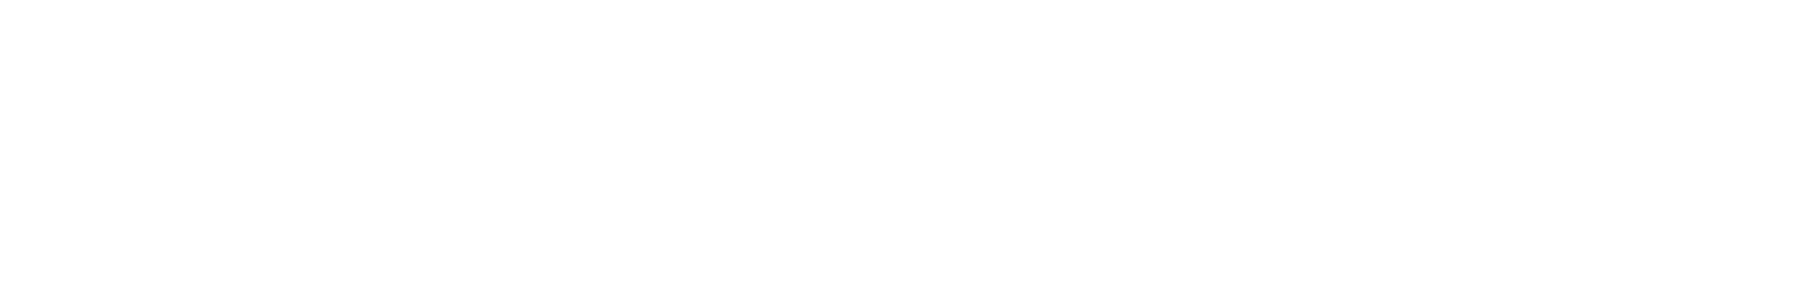 Hannon Hill white logo